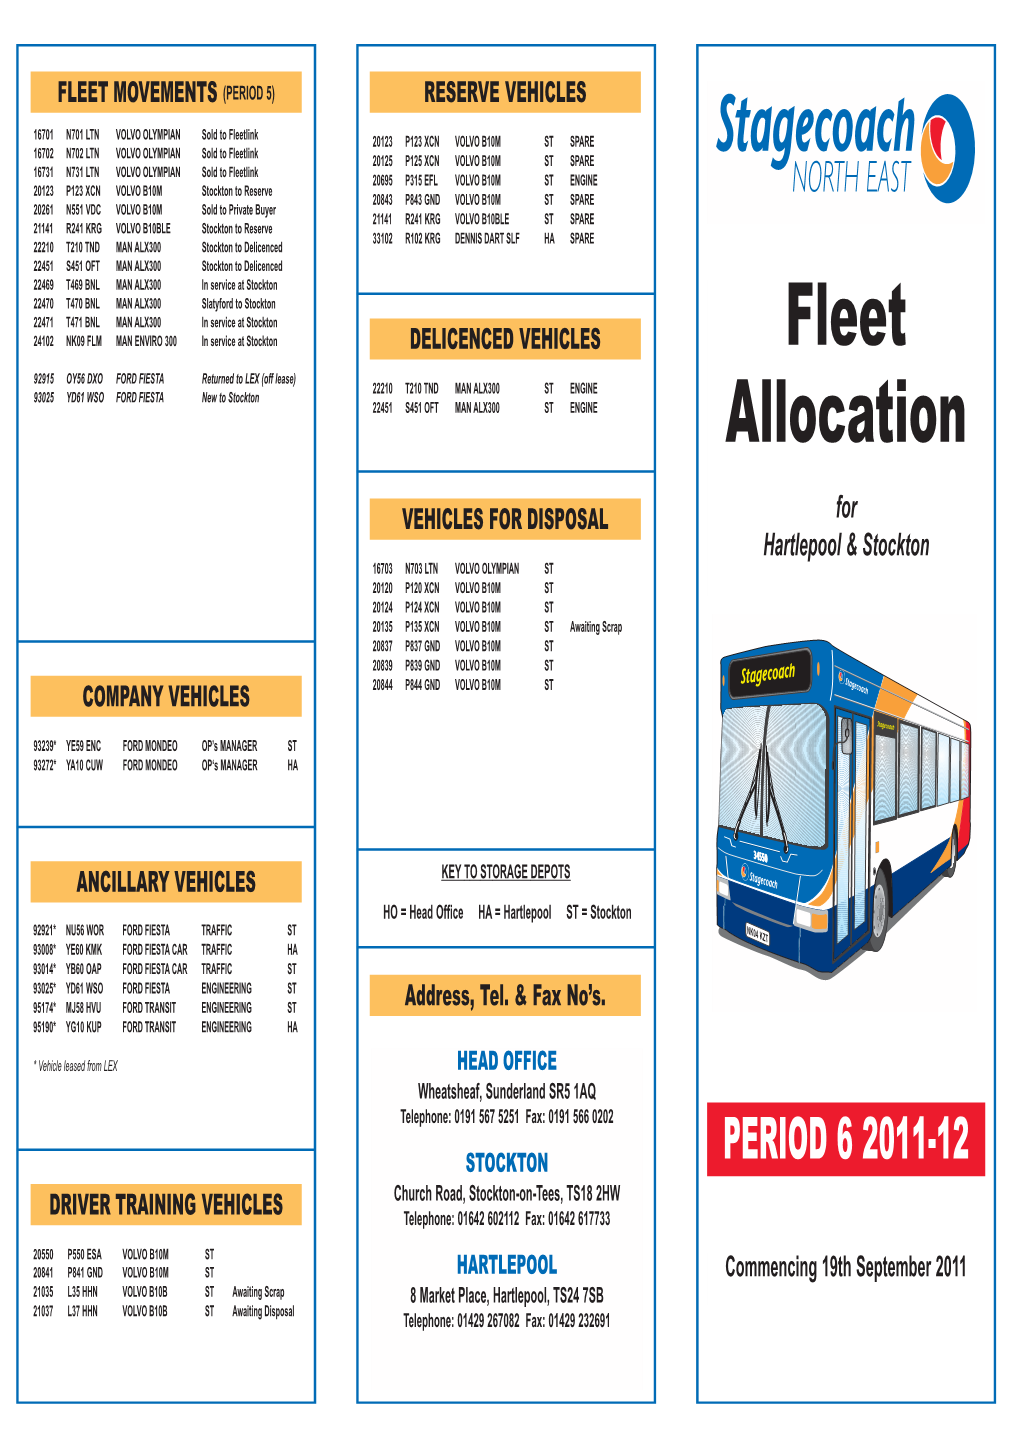 Fleet Allocation - Period 6 2011-12